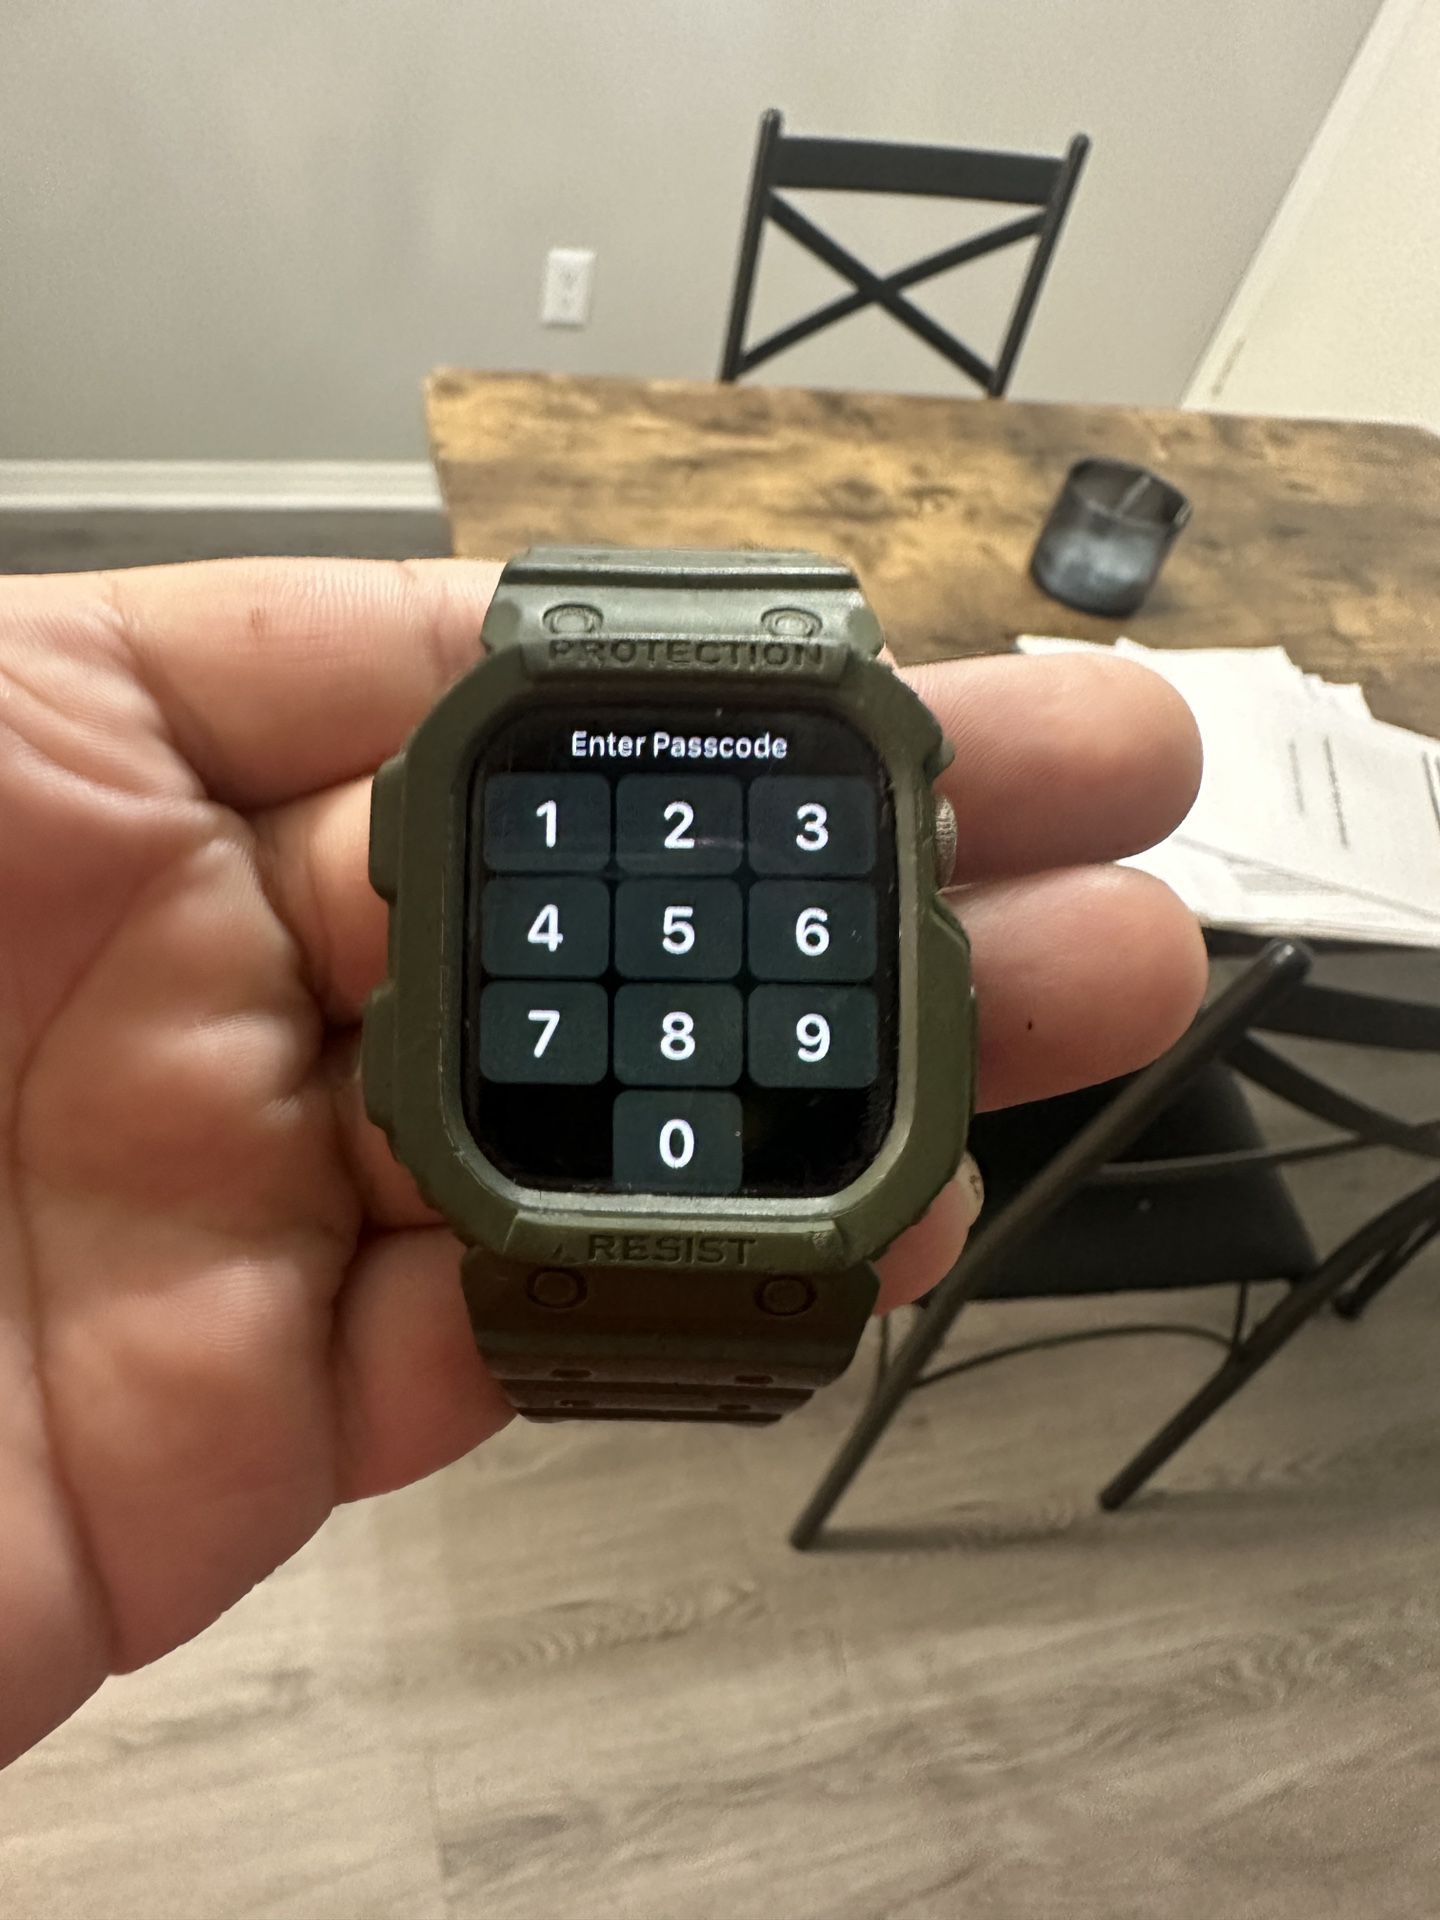 Series 6 Apple Watch